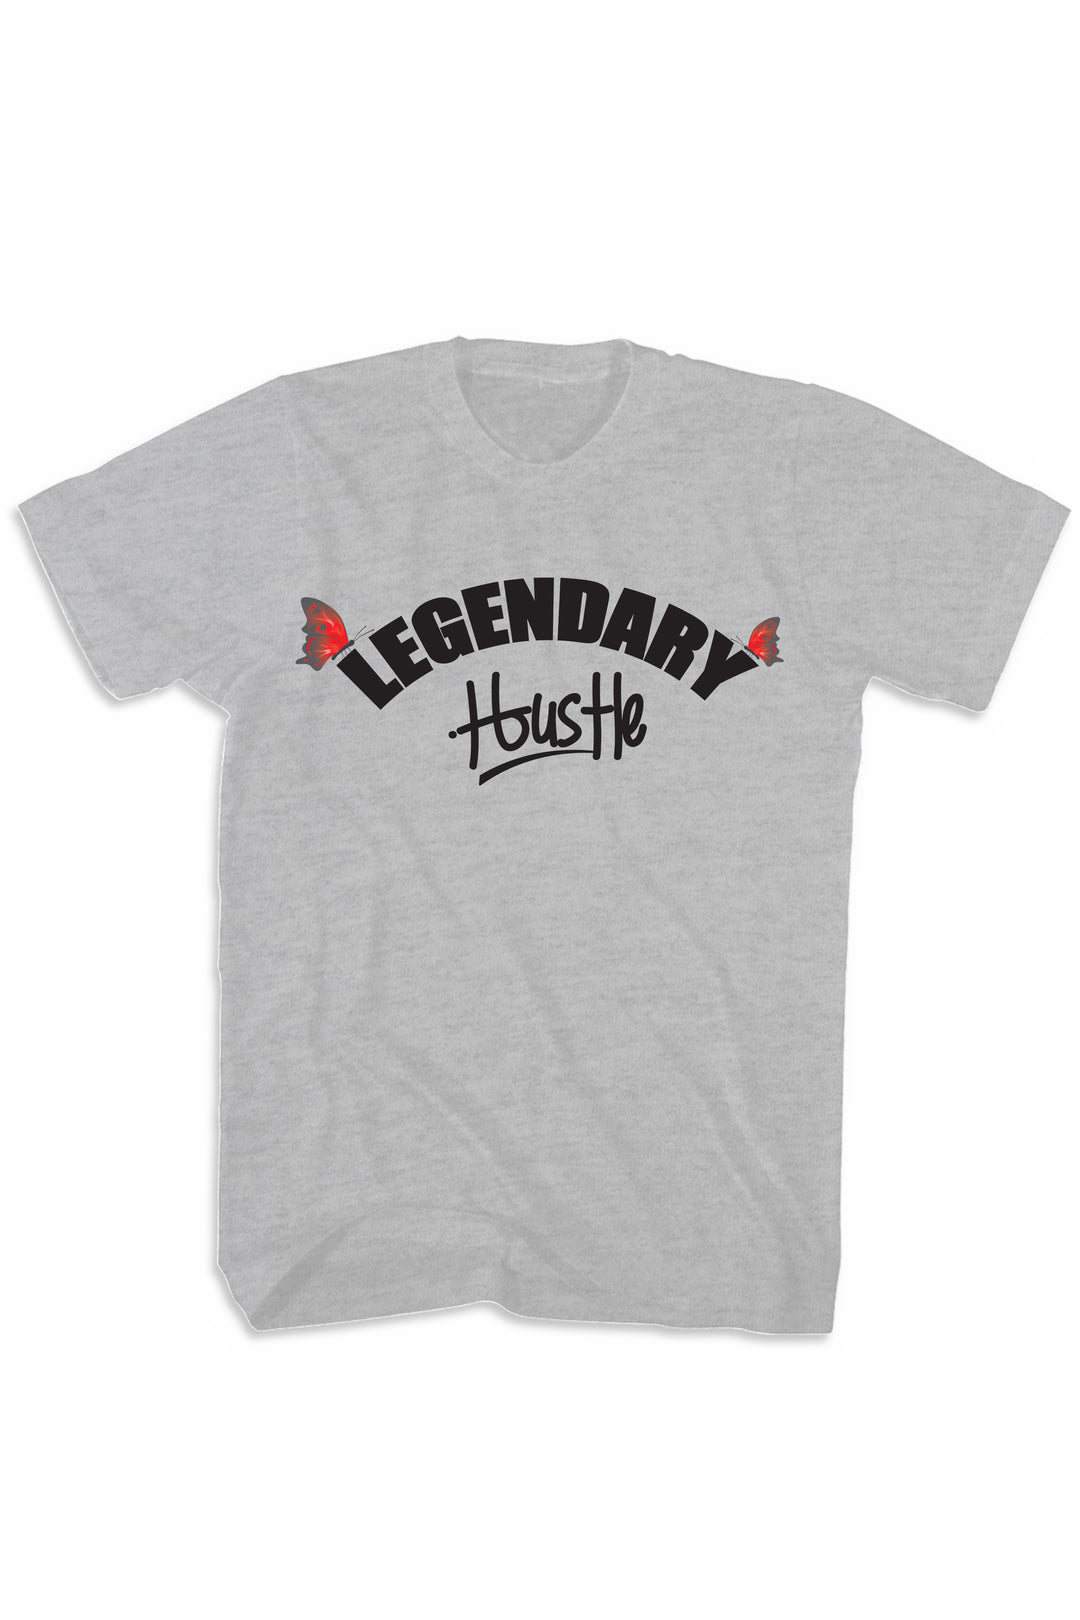 Legendary Hustle Tee (Black Logo) - Zamage